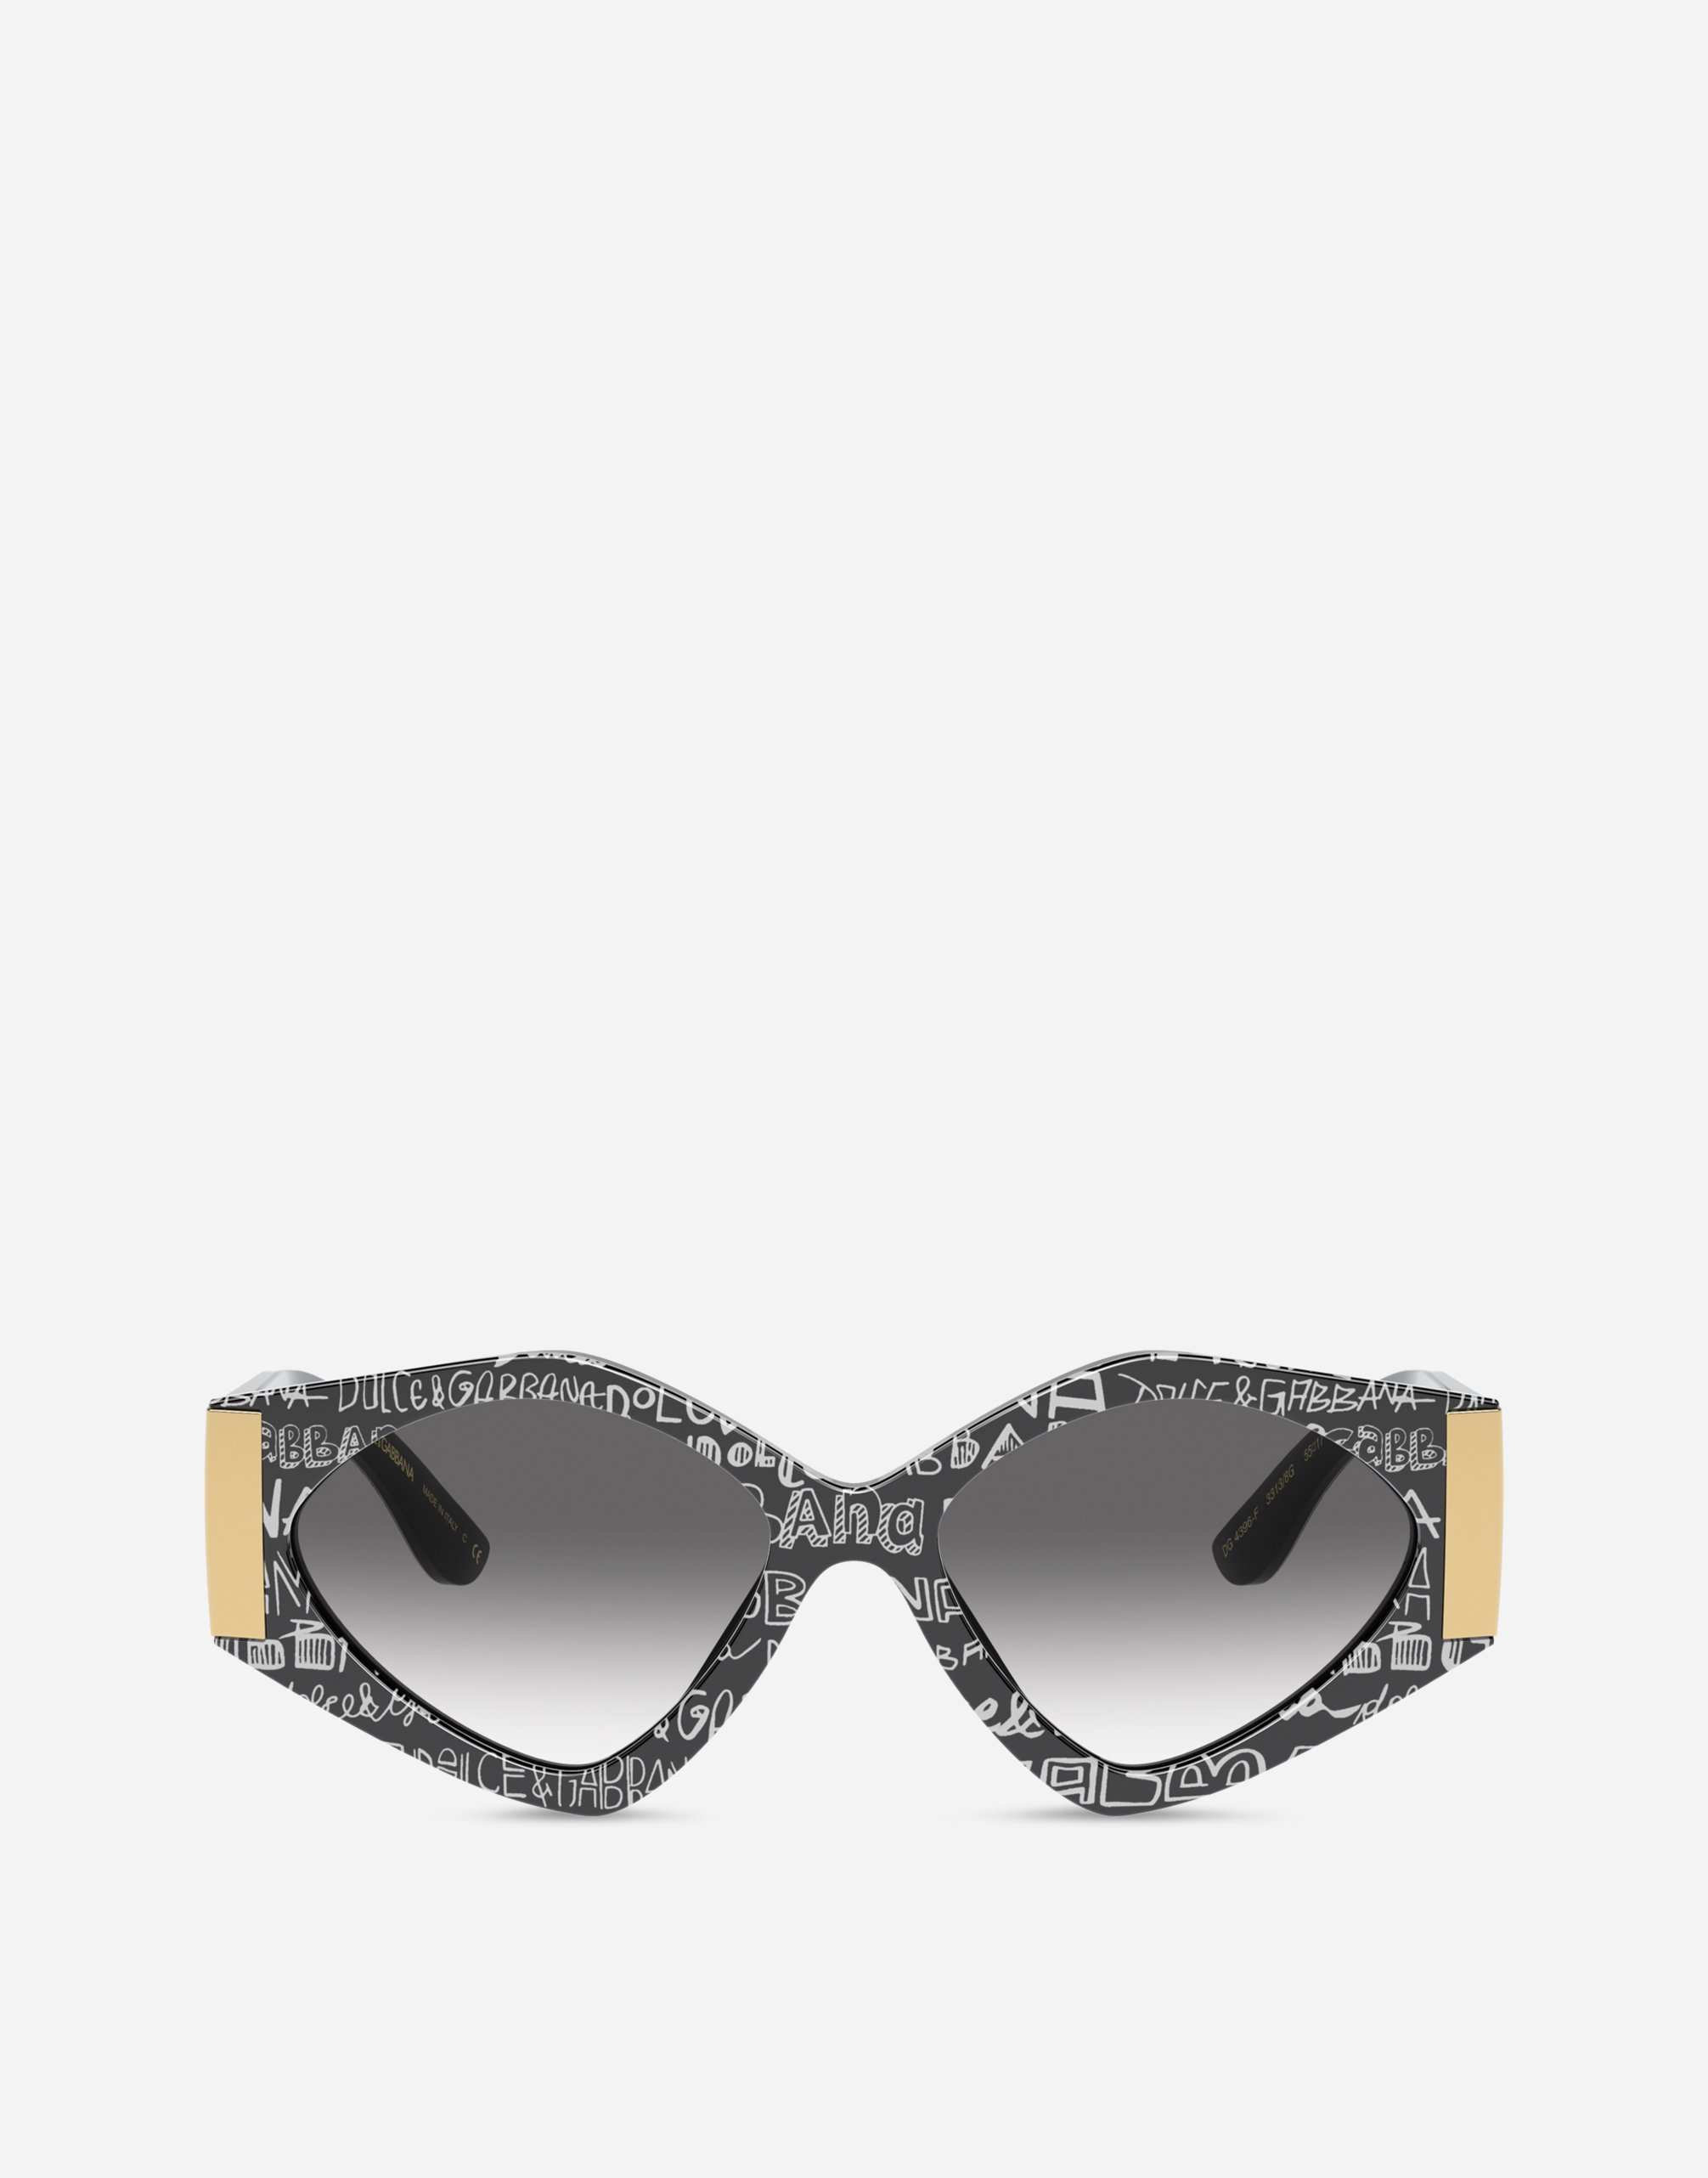 Modern print graffiti sunglasses in Black and White